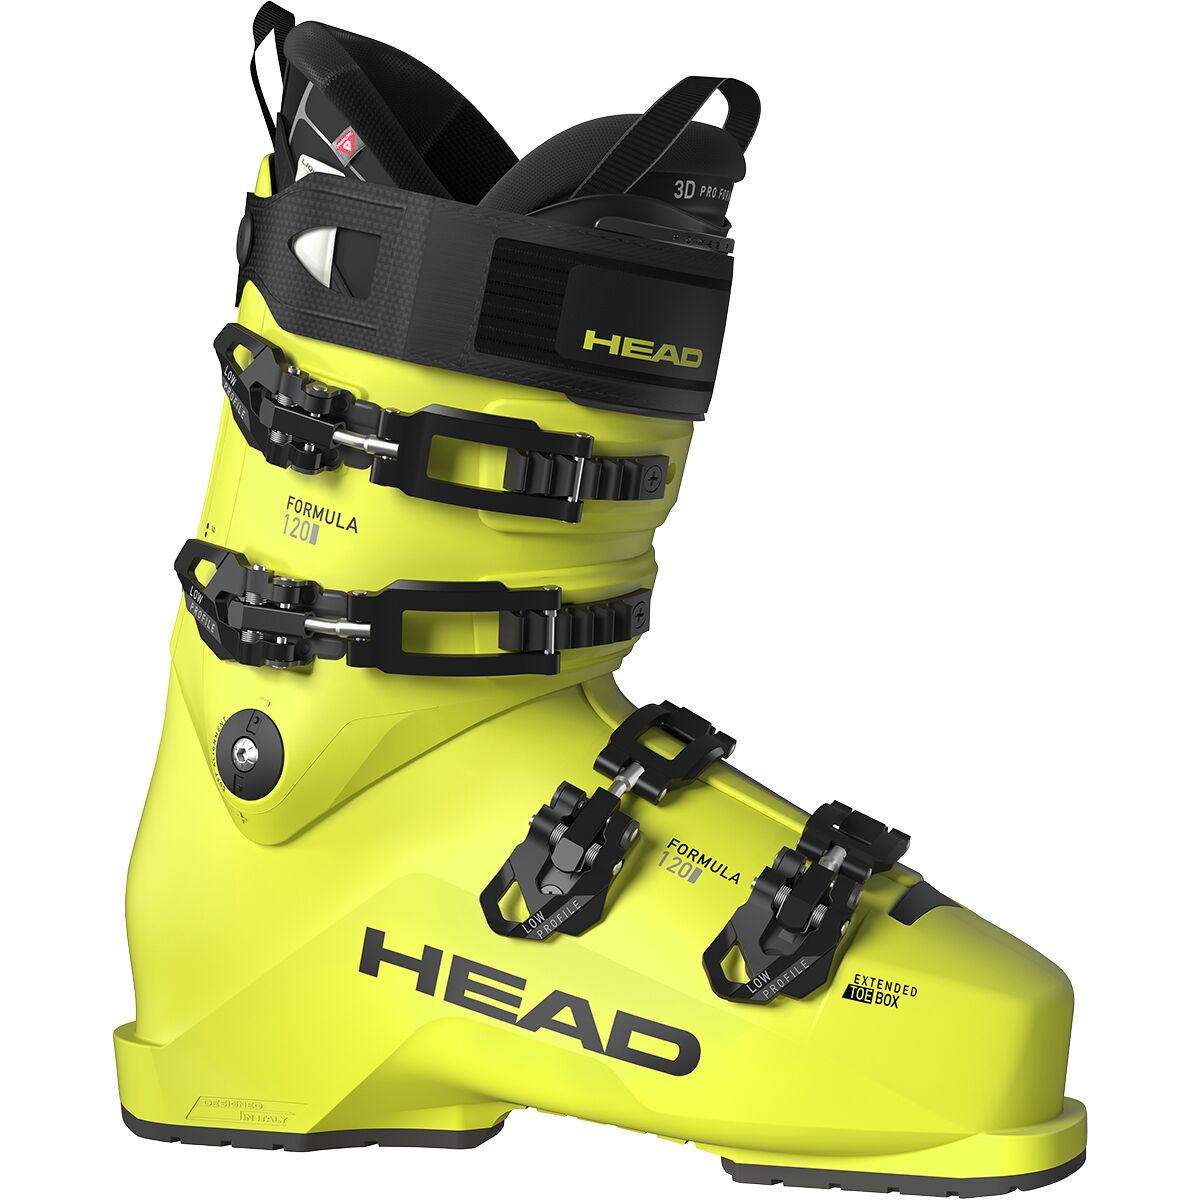 Head Skis USA Formula 120 Ski Boot